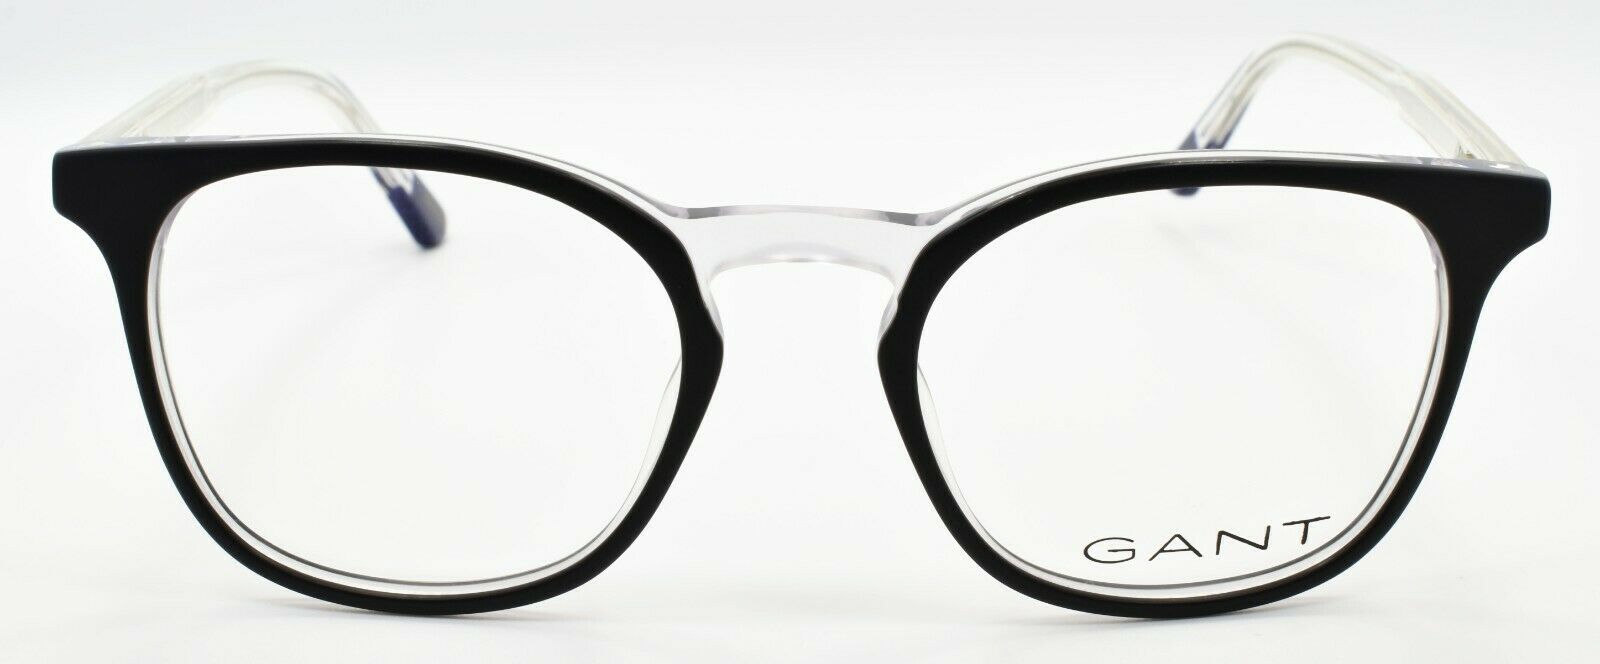 2-GANT GA3164 005 Men's Eyeglasses Frames 49-19-140 Black / Clear-664689917082-IKSpecs